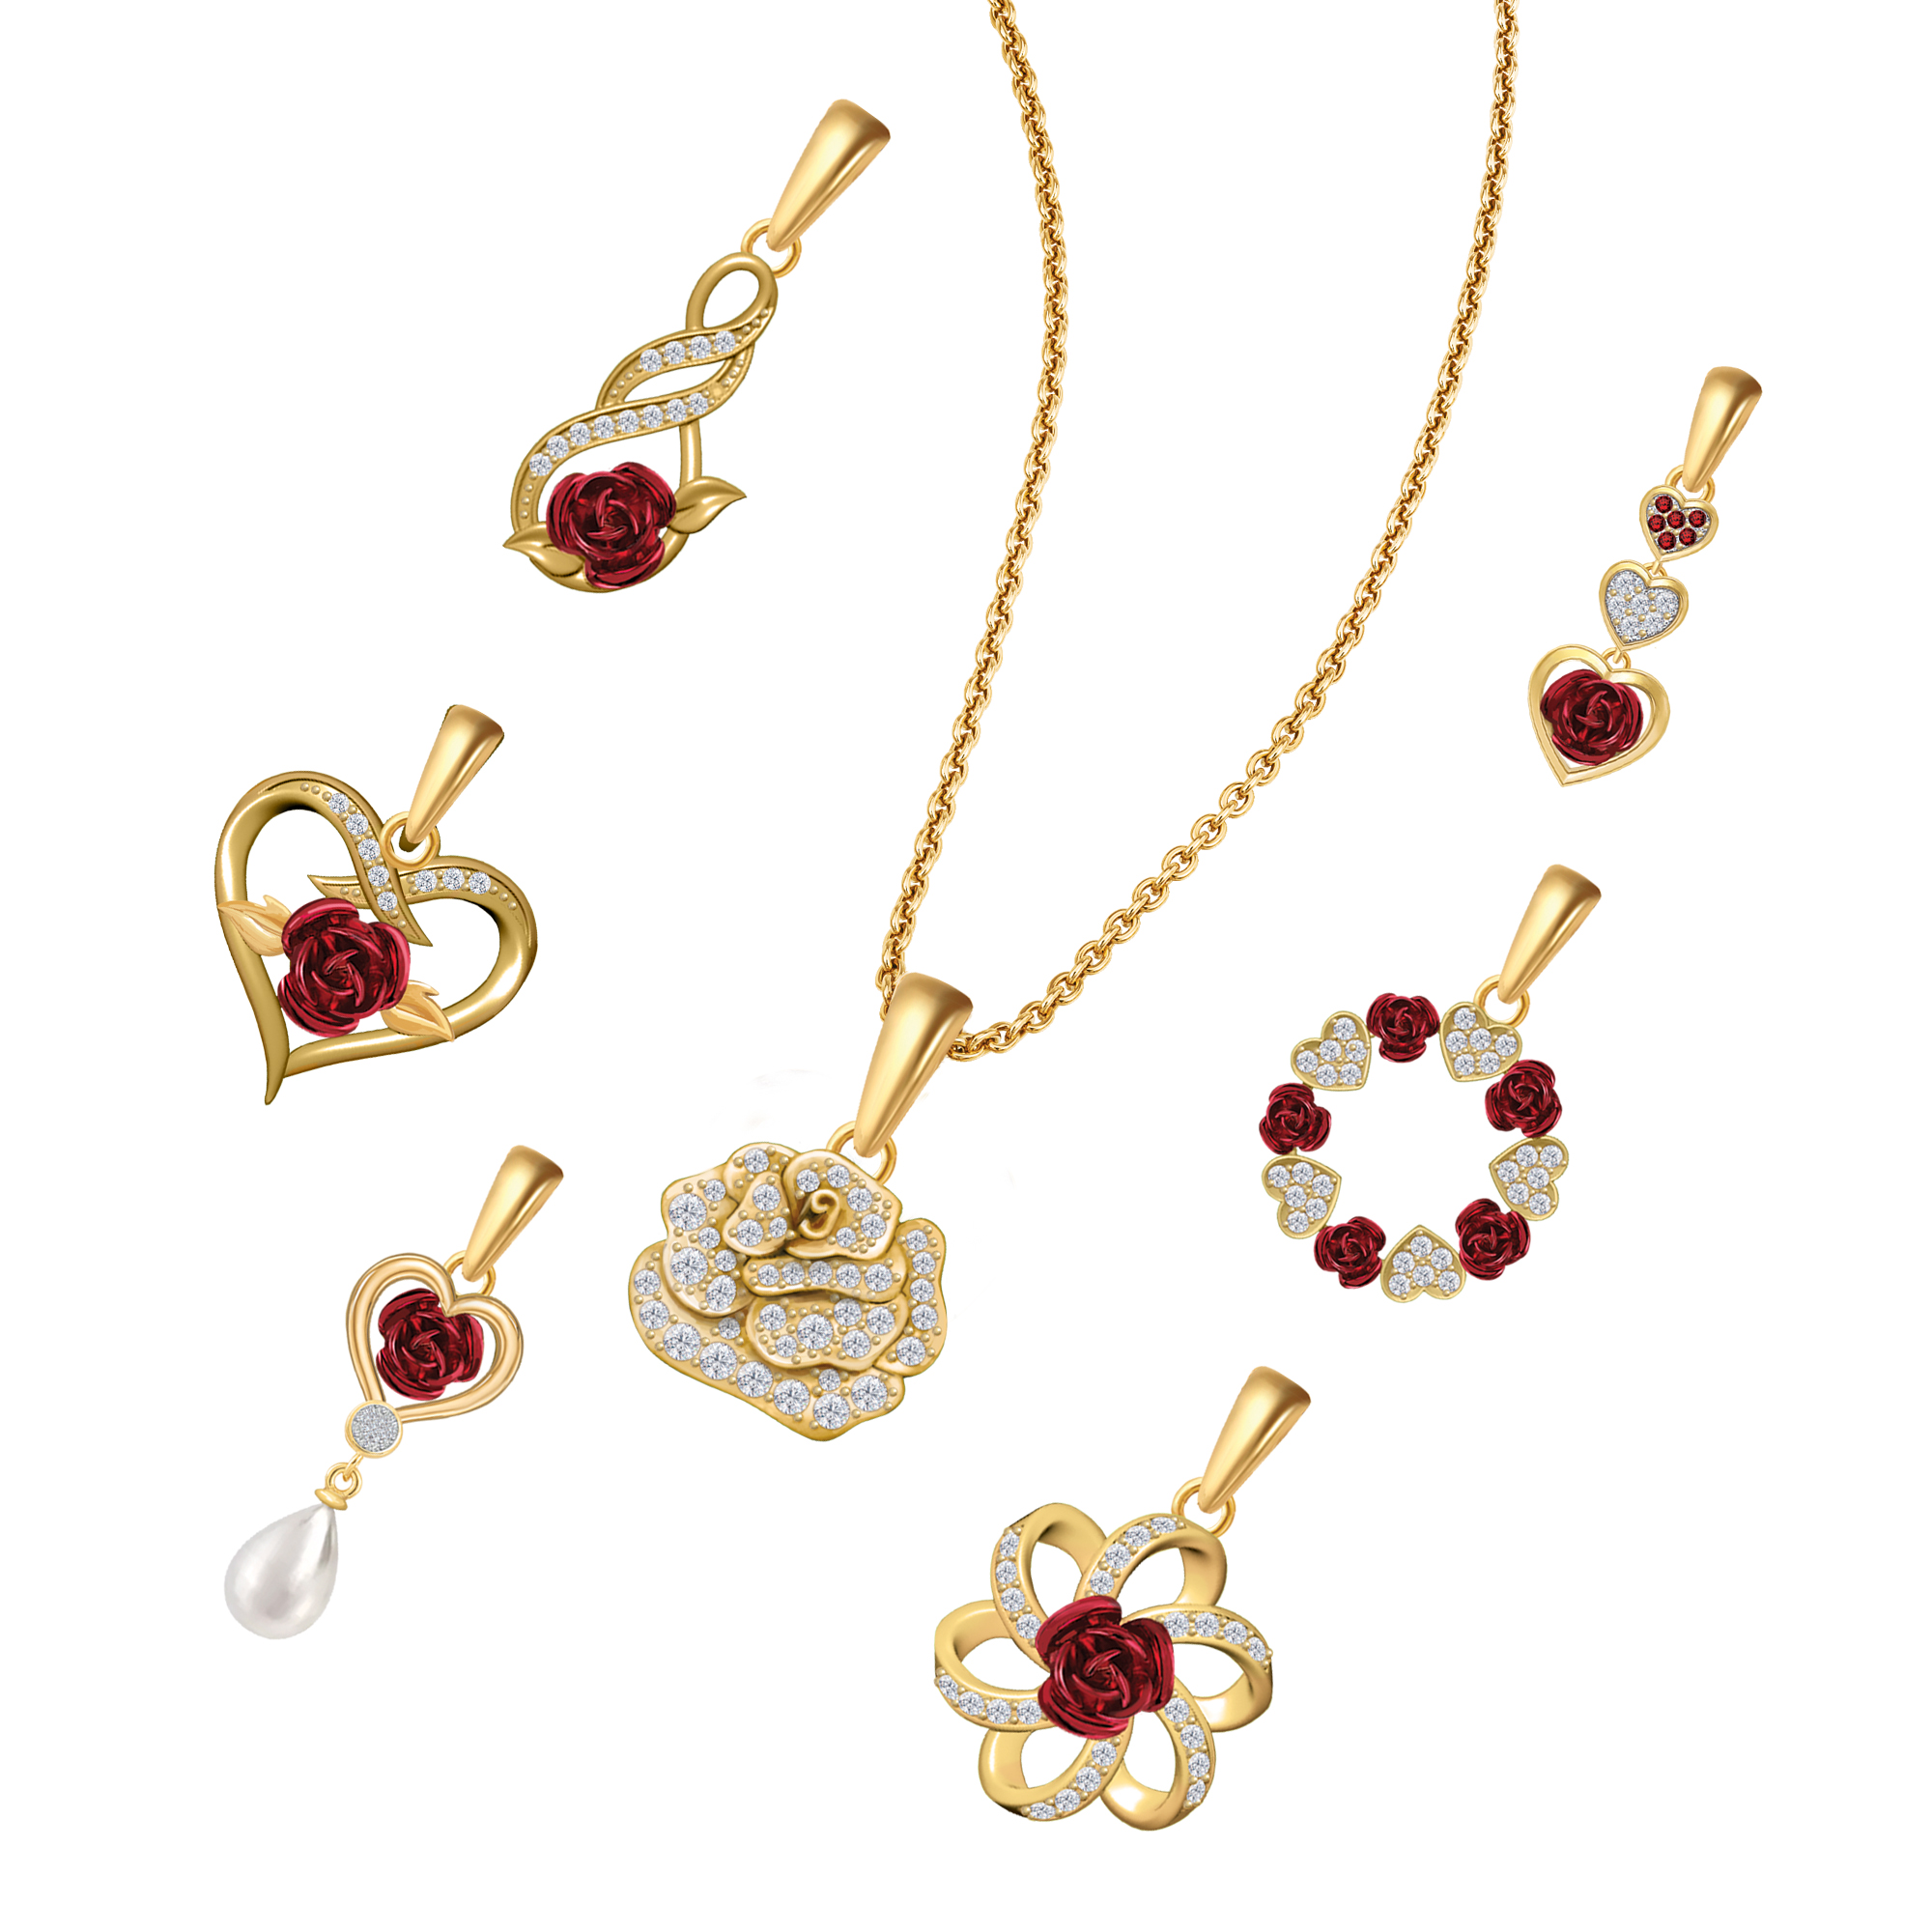 Romantic Roses Pendant Jewelry Box Set 10183 0016 a main